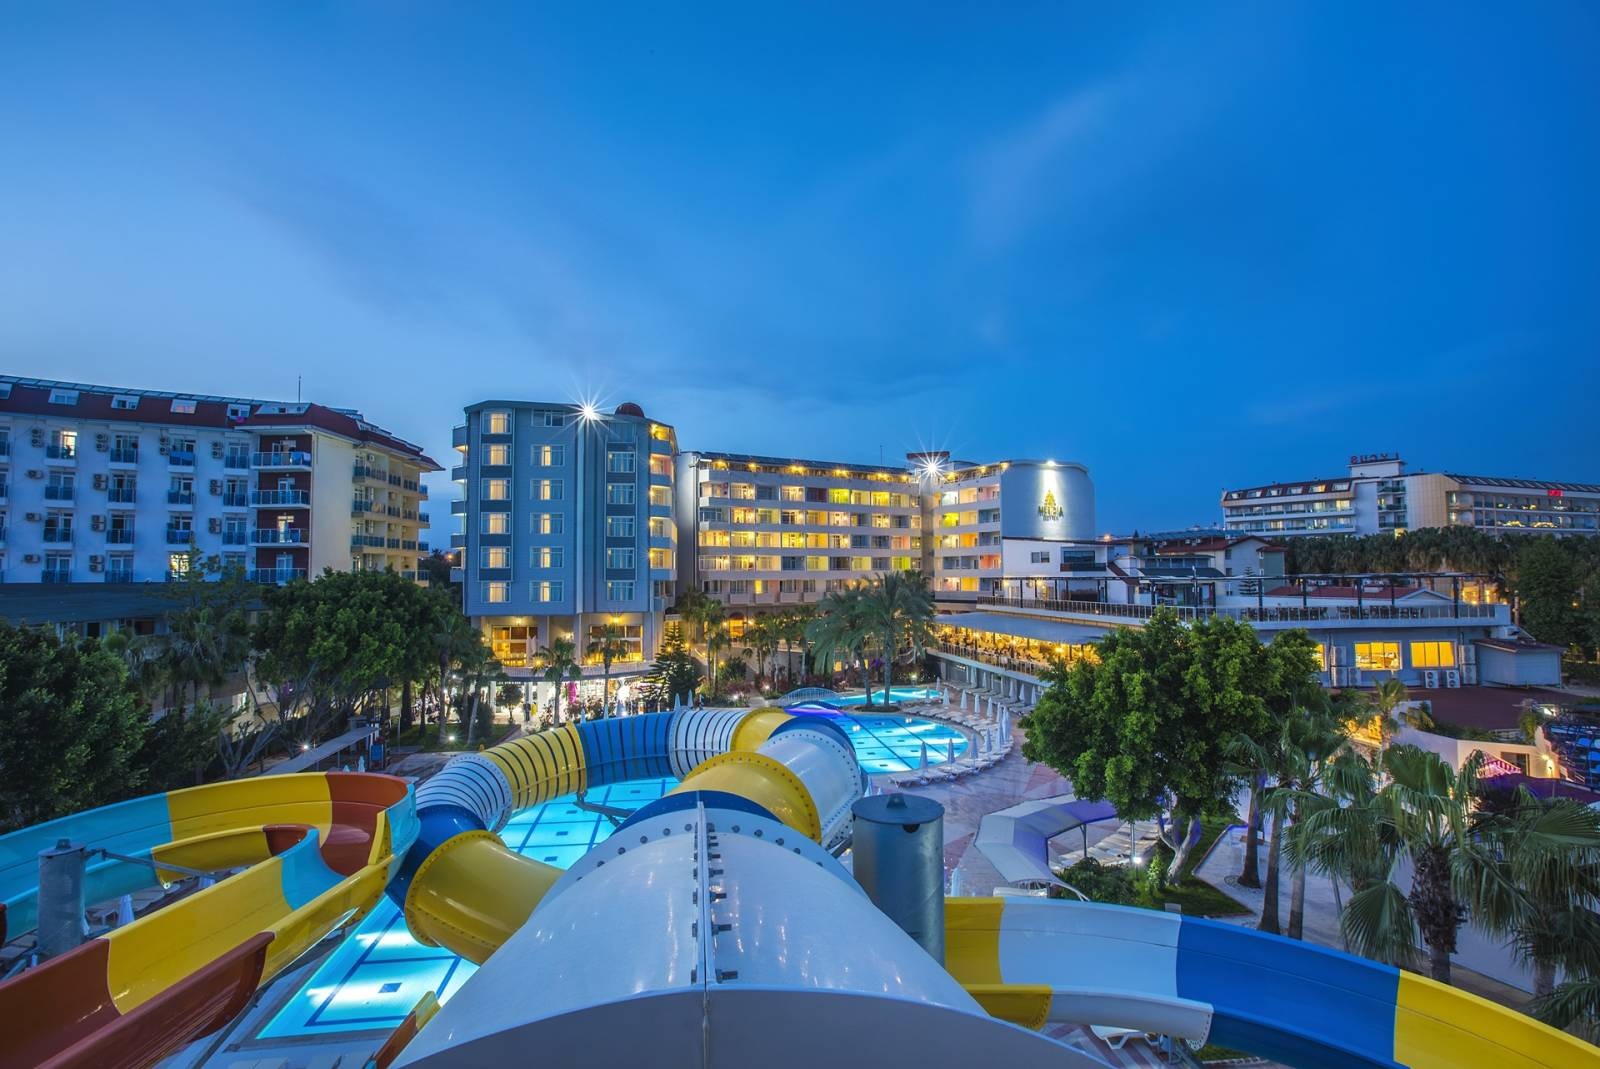 Meridia Beach Hotel - poilsinė kelionė - NNN